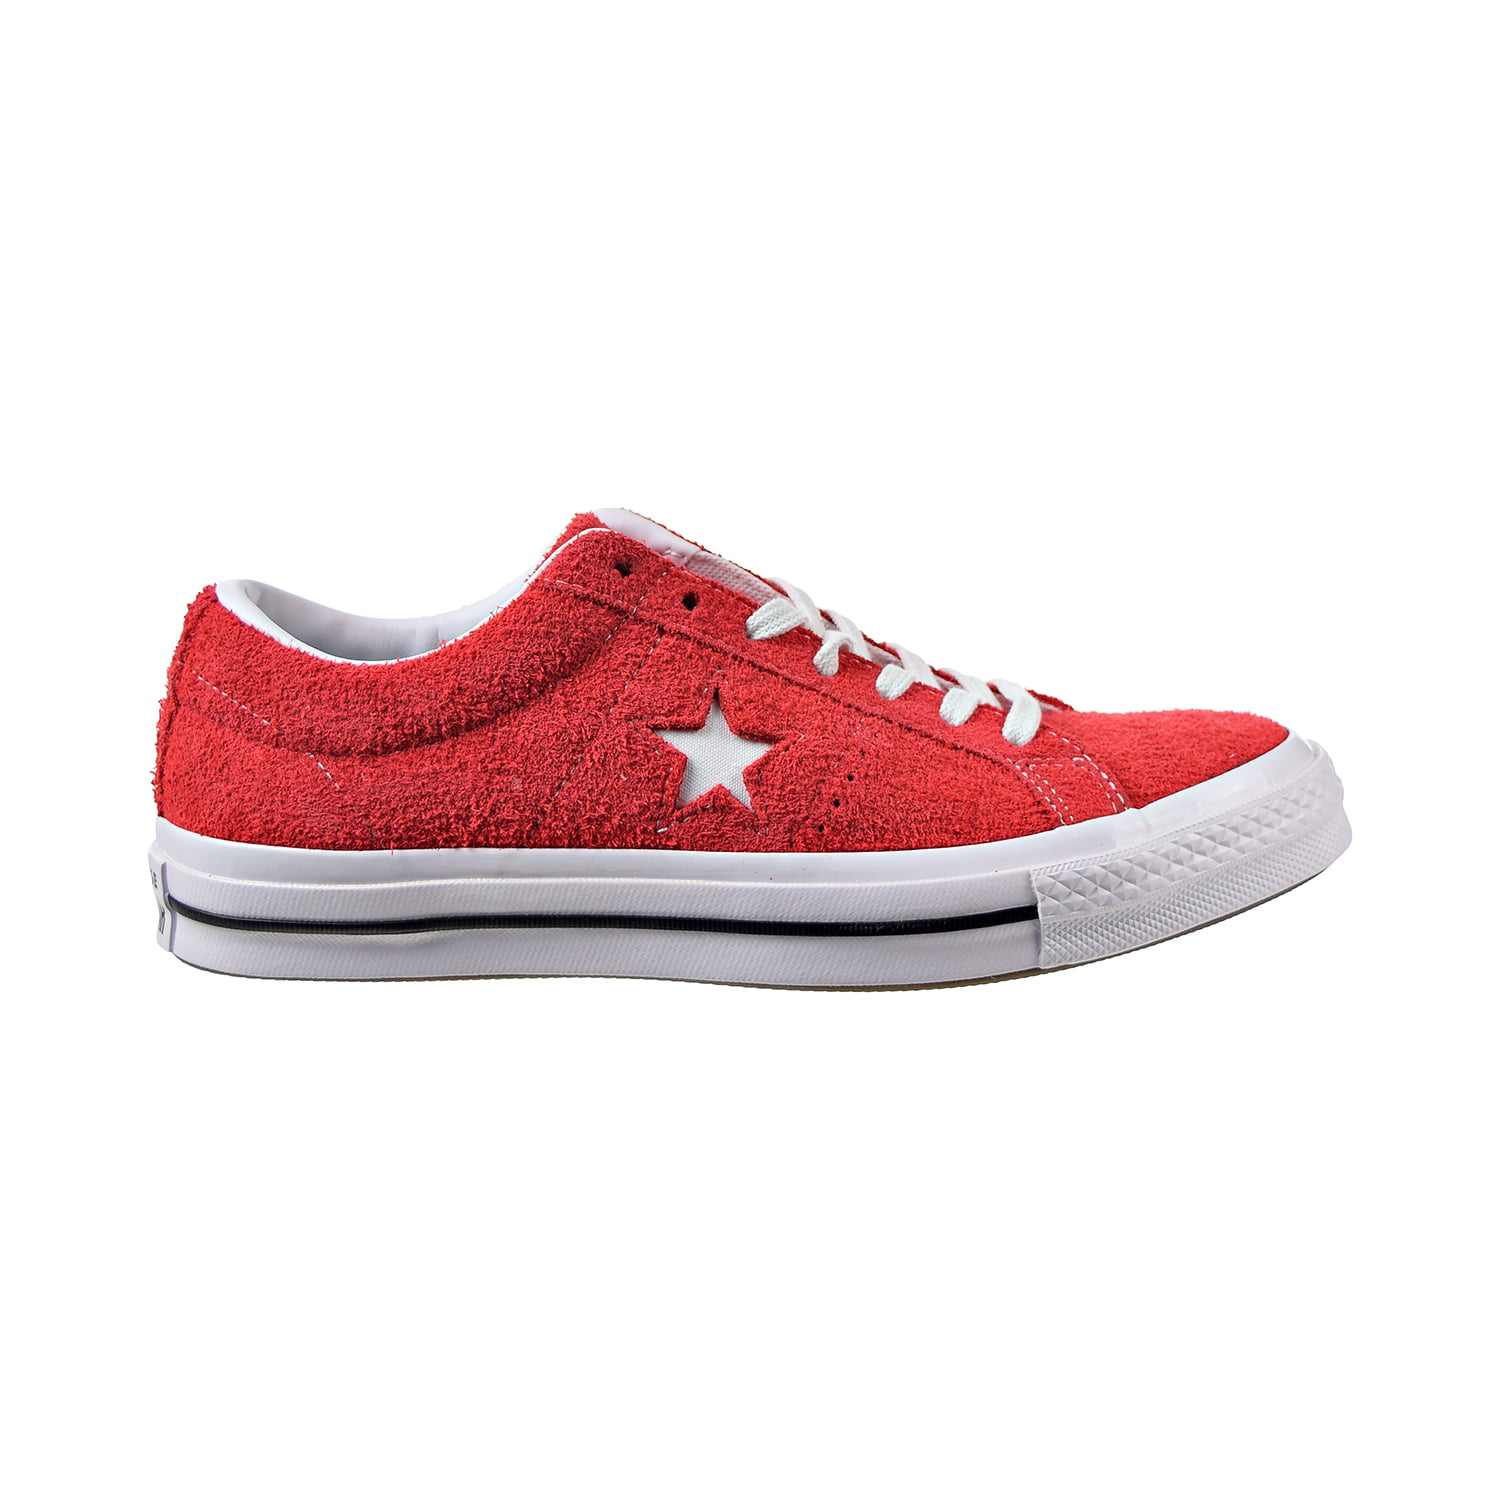 Bemiddelen Burgerschap Accumulatie Converse One Star OX Men's Shoes Red-White 158434c - Walmart.com